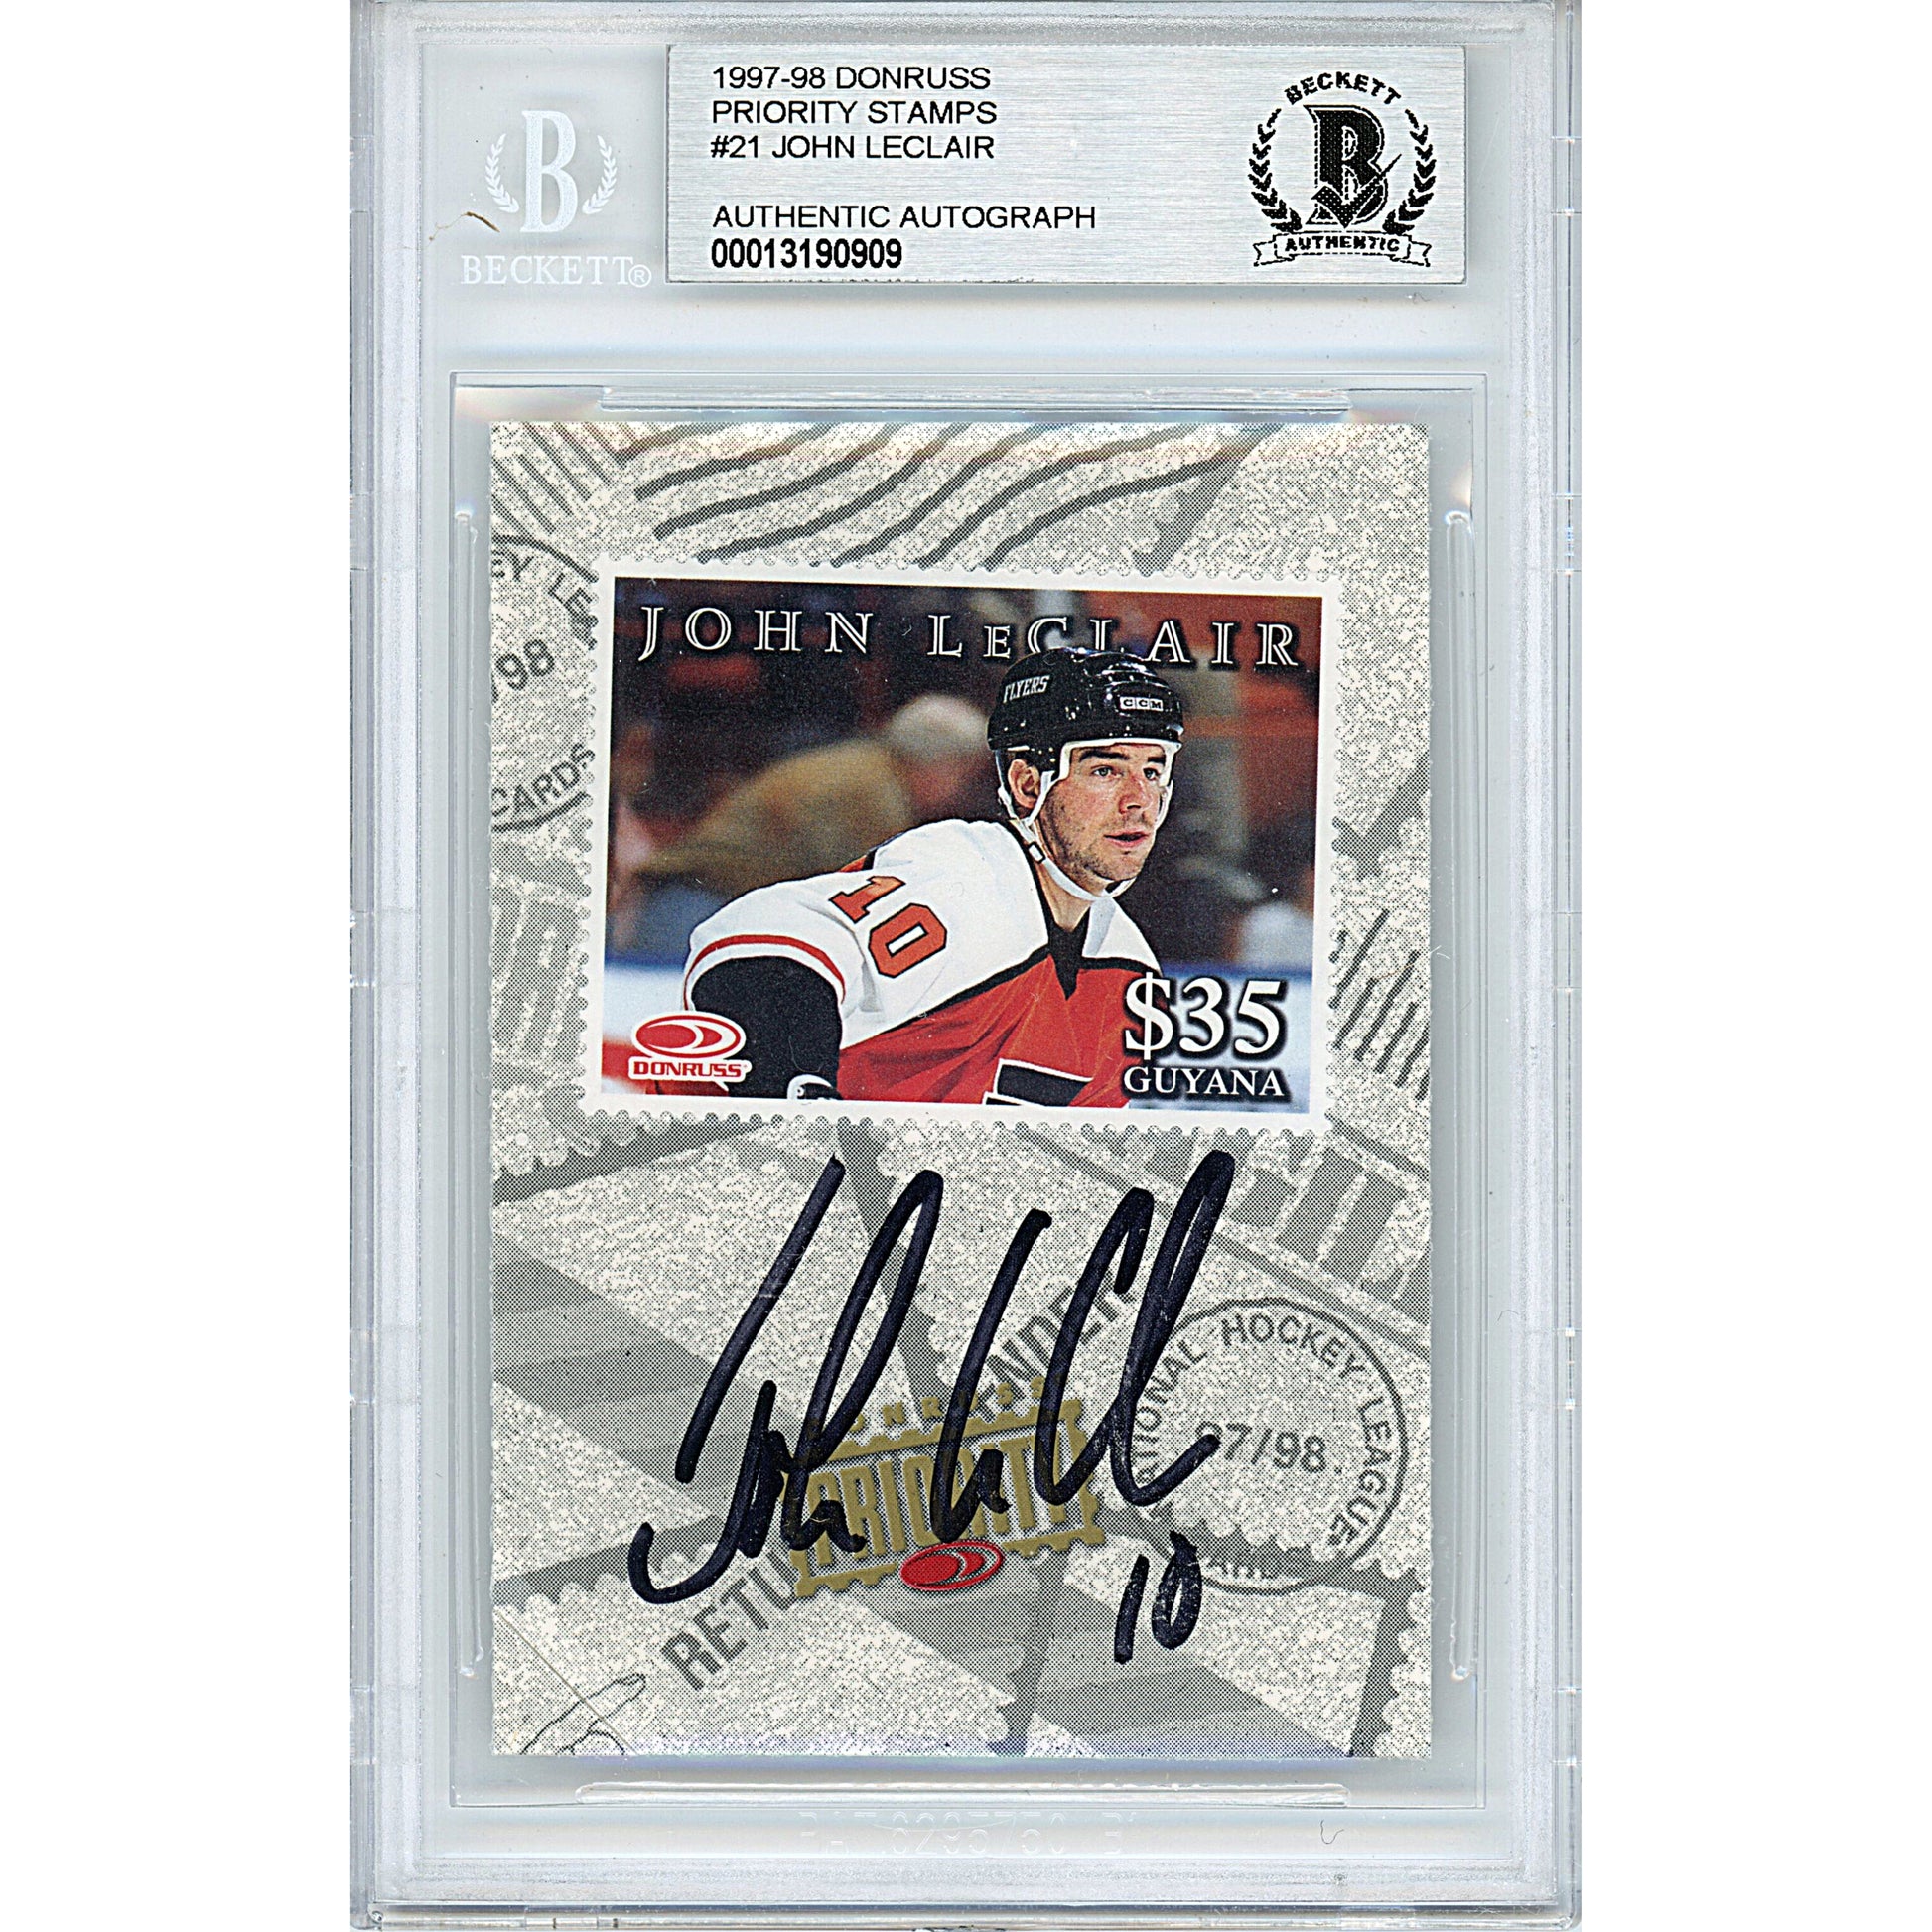 Hockey- Autographed- John LeClair Signed Philadelphia Flyers 1997-1998 Donruss Priority Stamps Insert Hockey Card Beckett Slabbed 00013190909 - 101